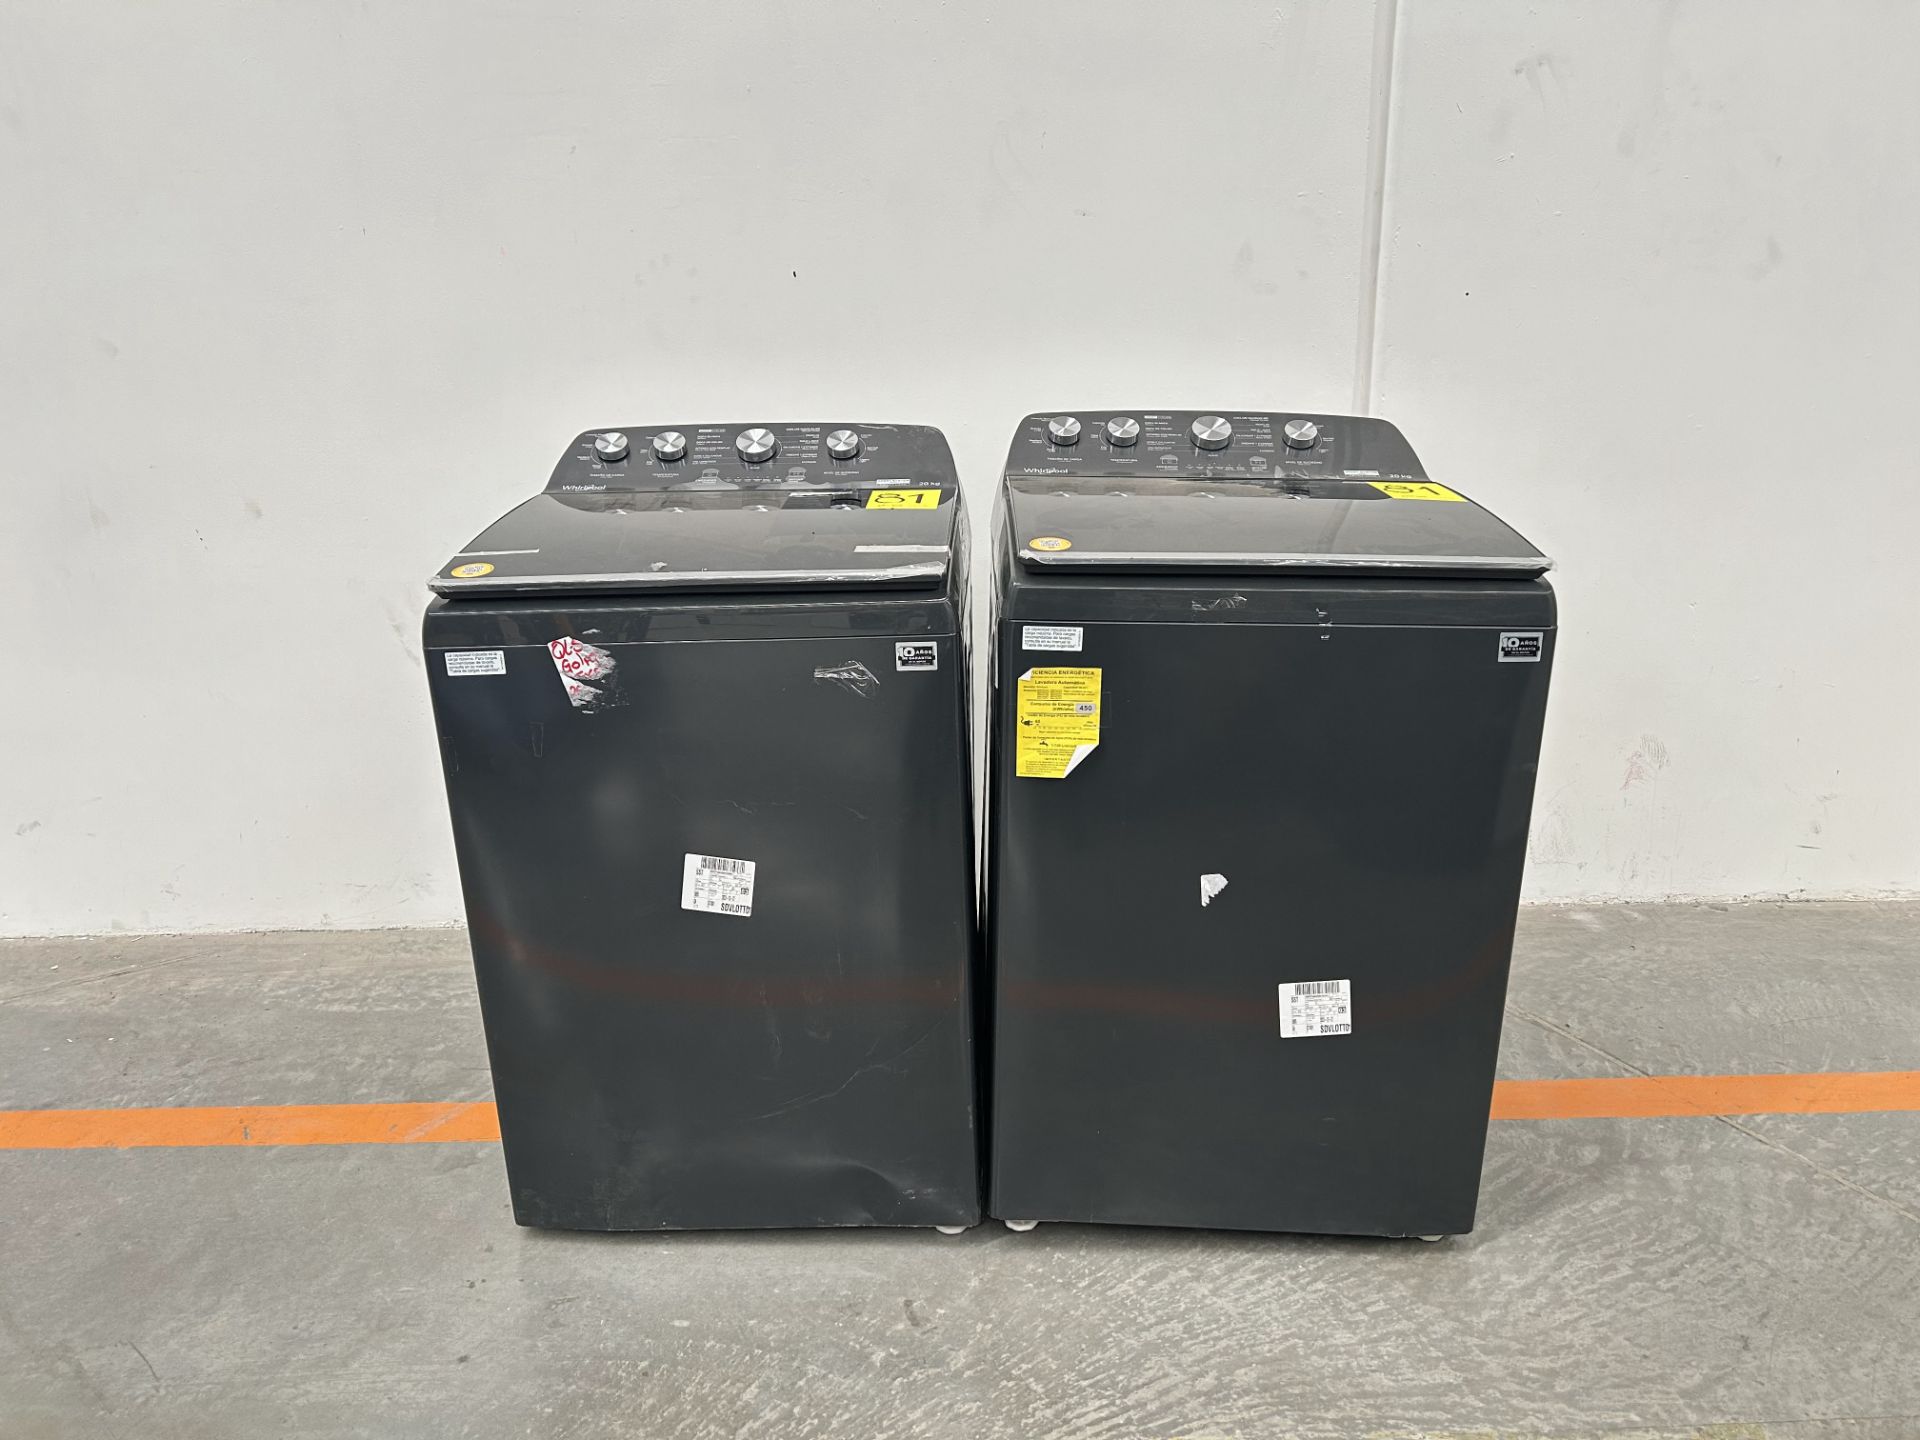 Lote de 2 lavadoras contiene: 1 Lavadora de 20 KG Marca WHIRPOOL, Modelo 8MWTW2024WLG0, Serie 97747